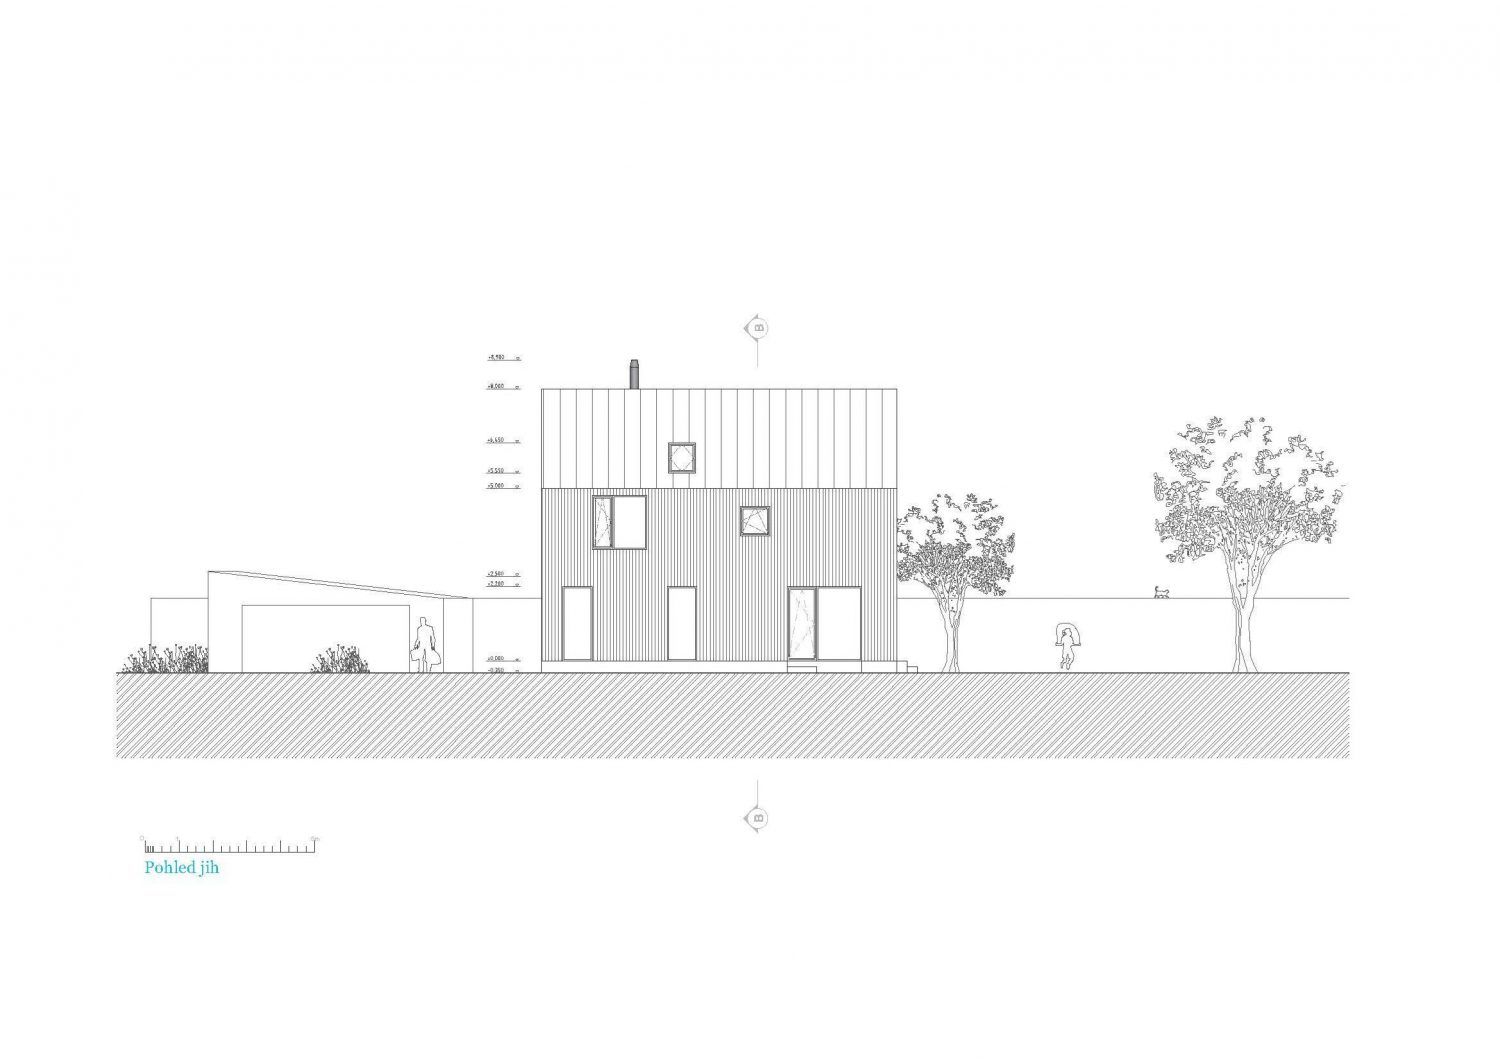 The Carbon House by Mjölk architects